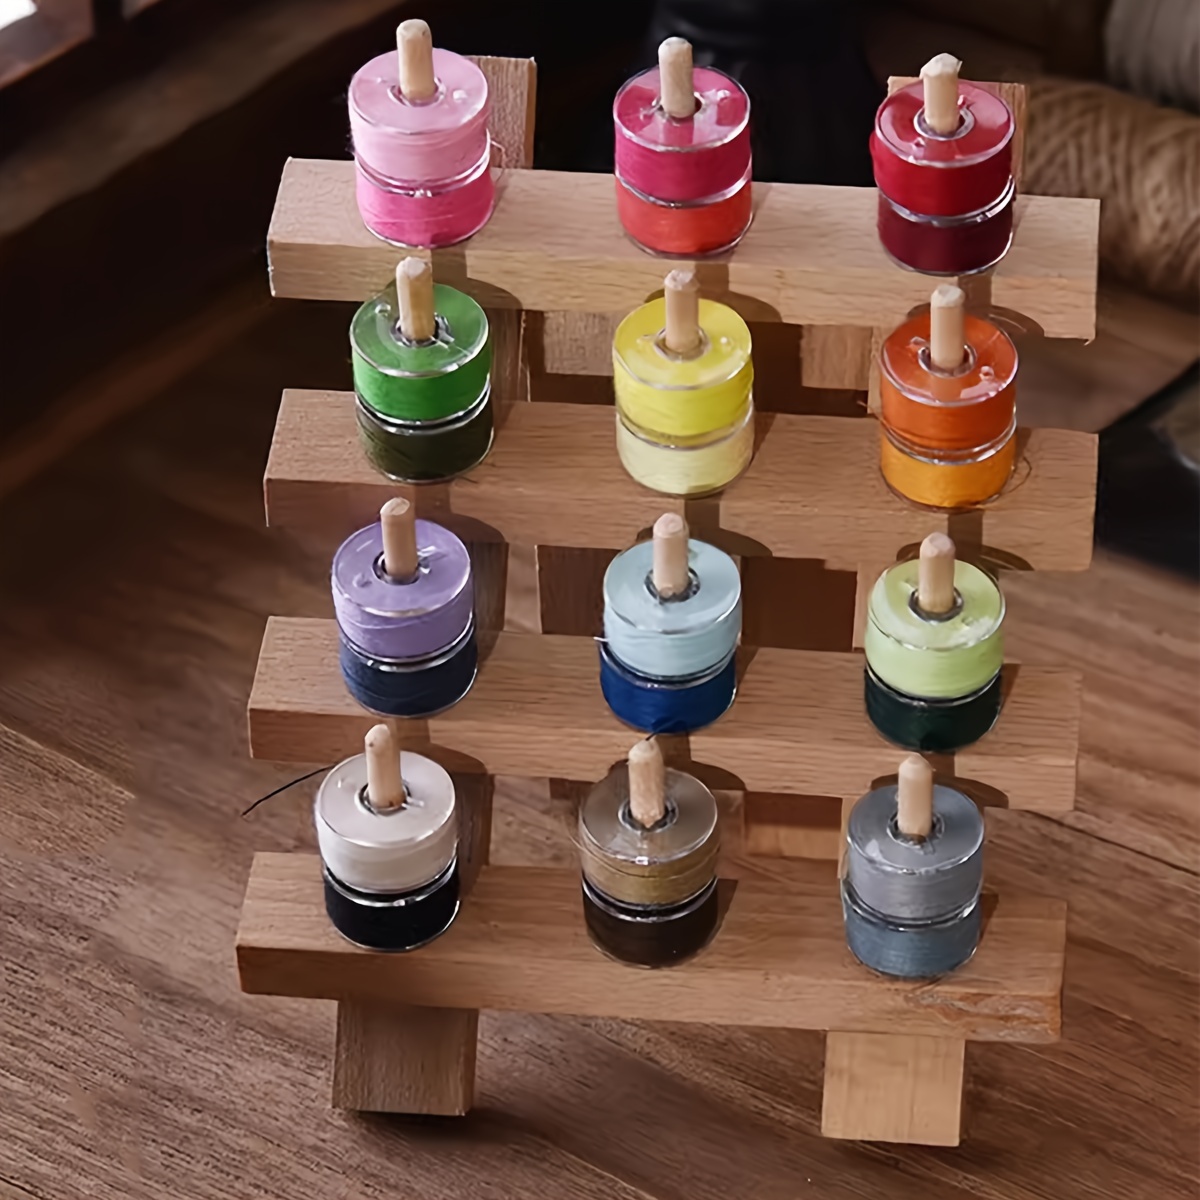 JumblCrafts Wooden Thread Rack Holder. 60-Spool Thread Organizer Rack W/  Hooks & Flip-Out Legs, 16.1”x1.9”x13.2”